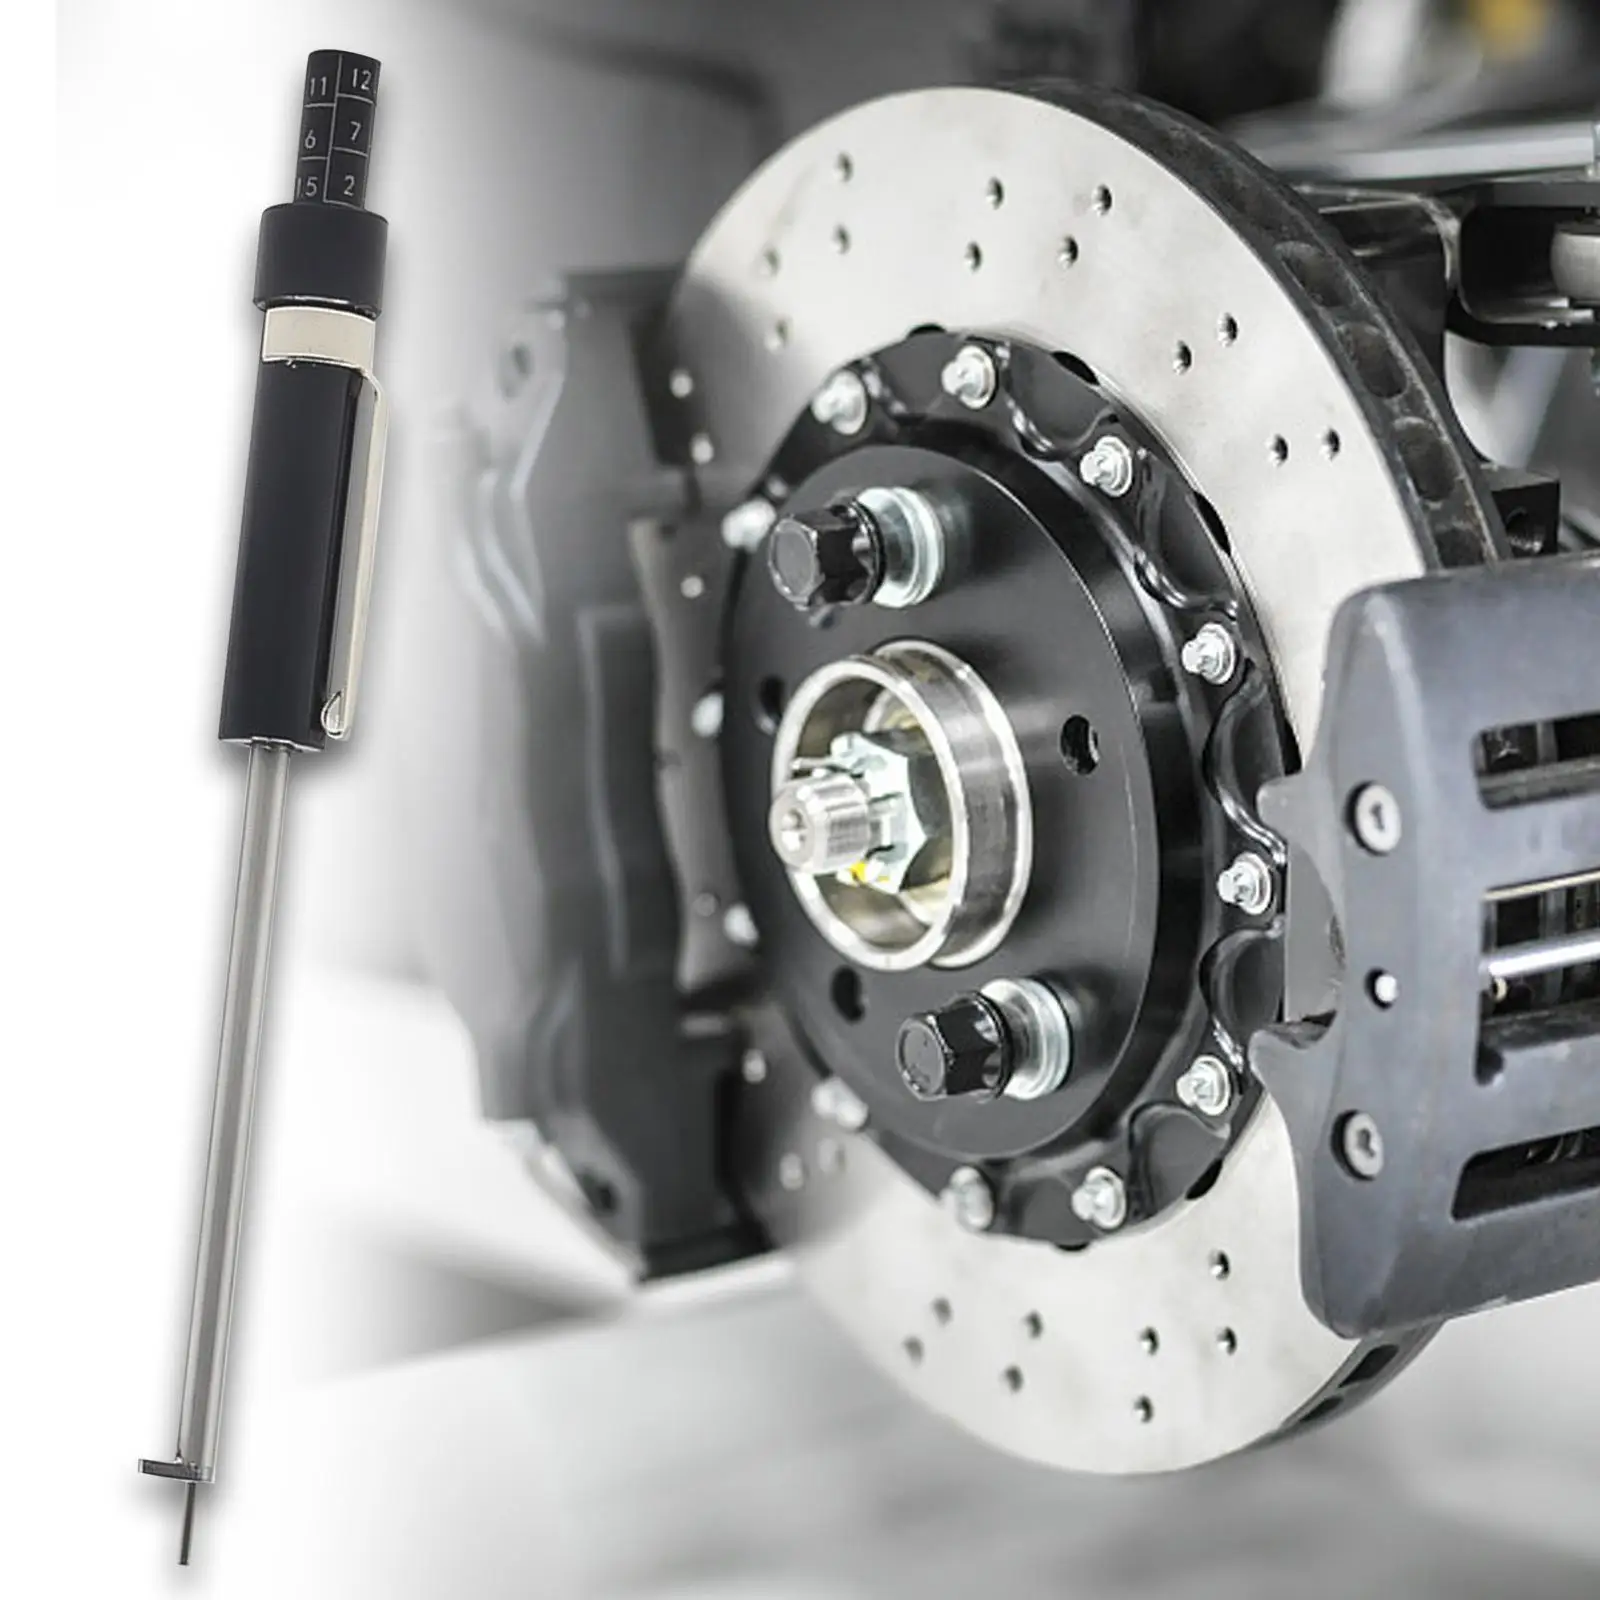 Car Brake Pad Tester Detection Pen Easy Using Steel Handle Time Saving Accs Brake Pad Measuring Tool for Auto Garage